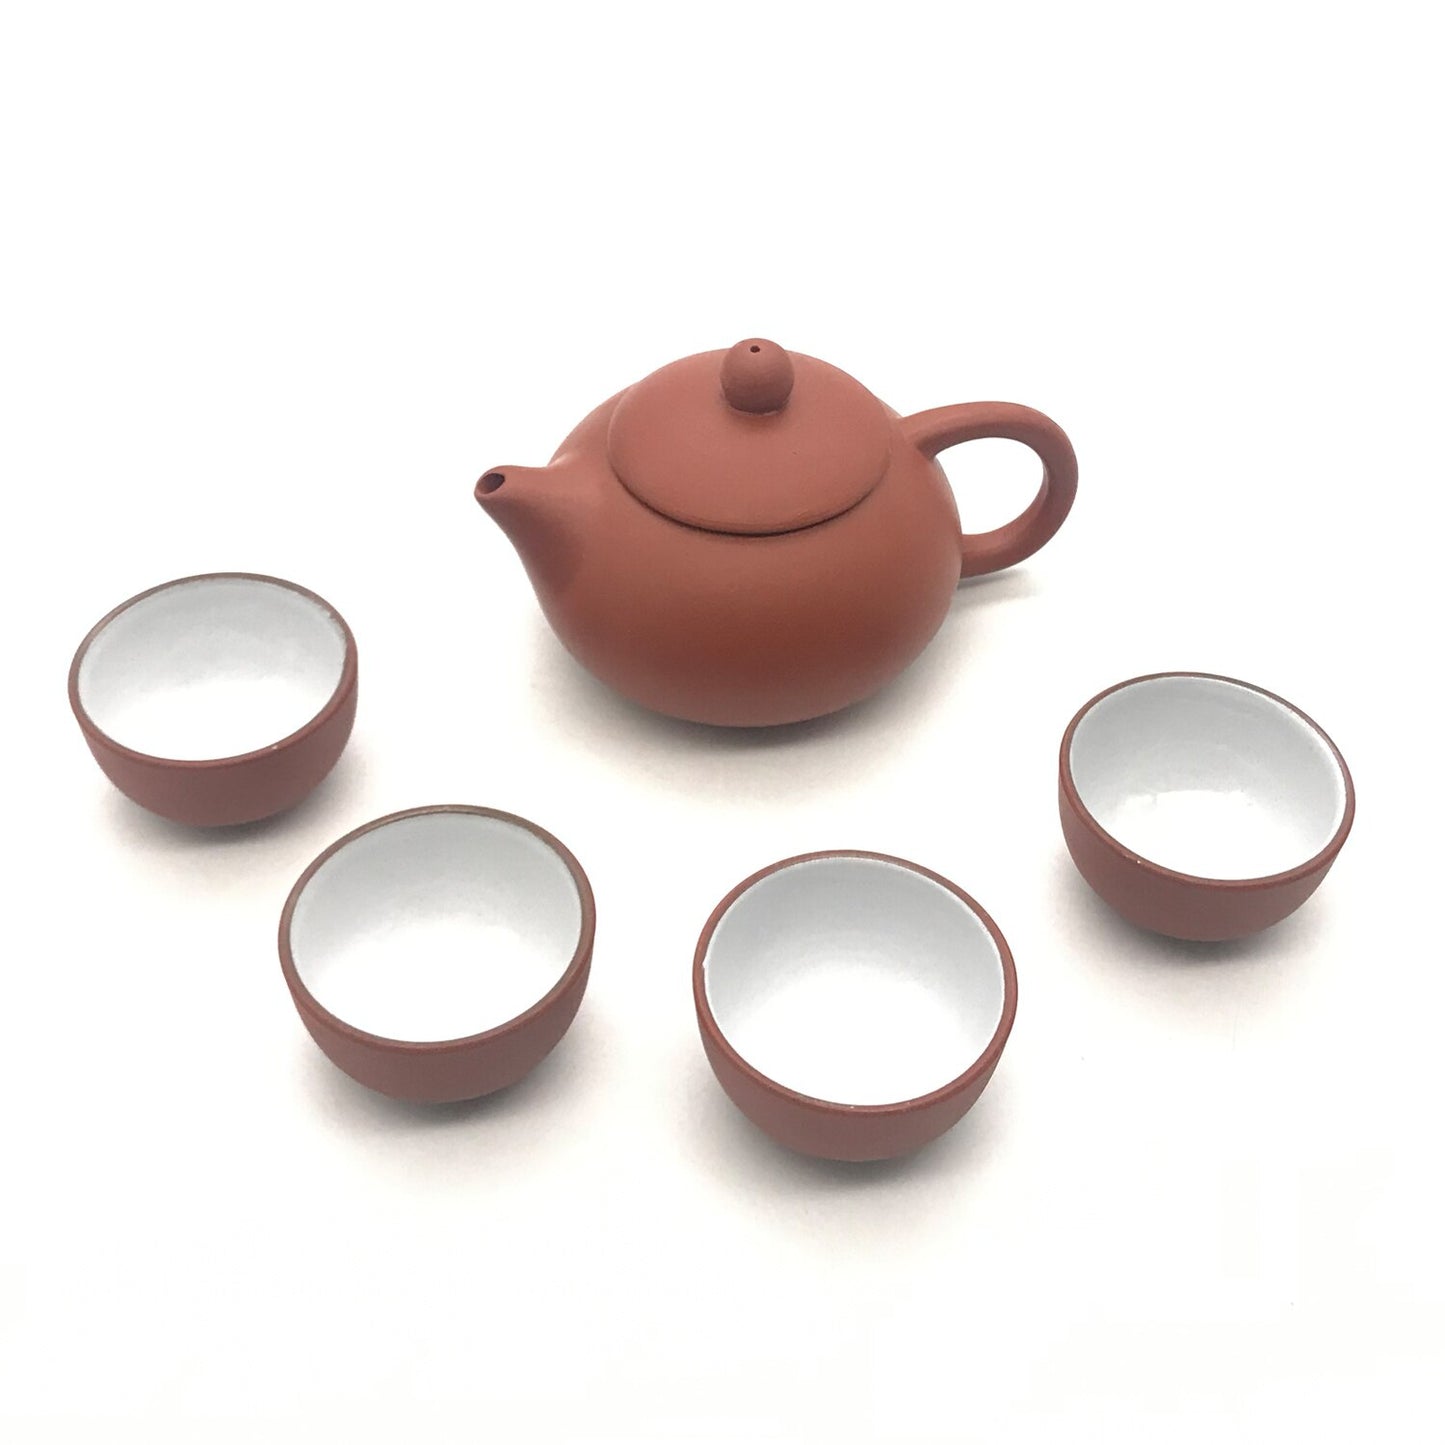 Juegos de té tohoku